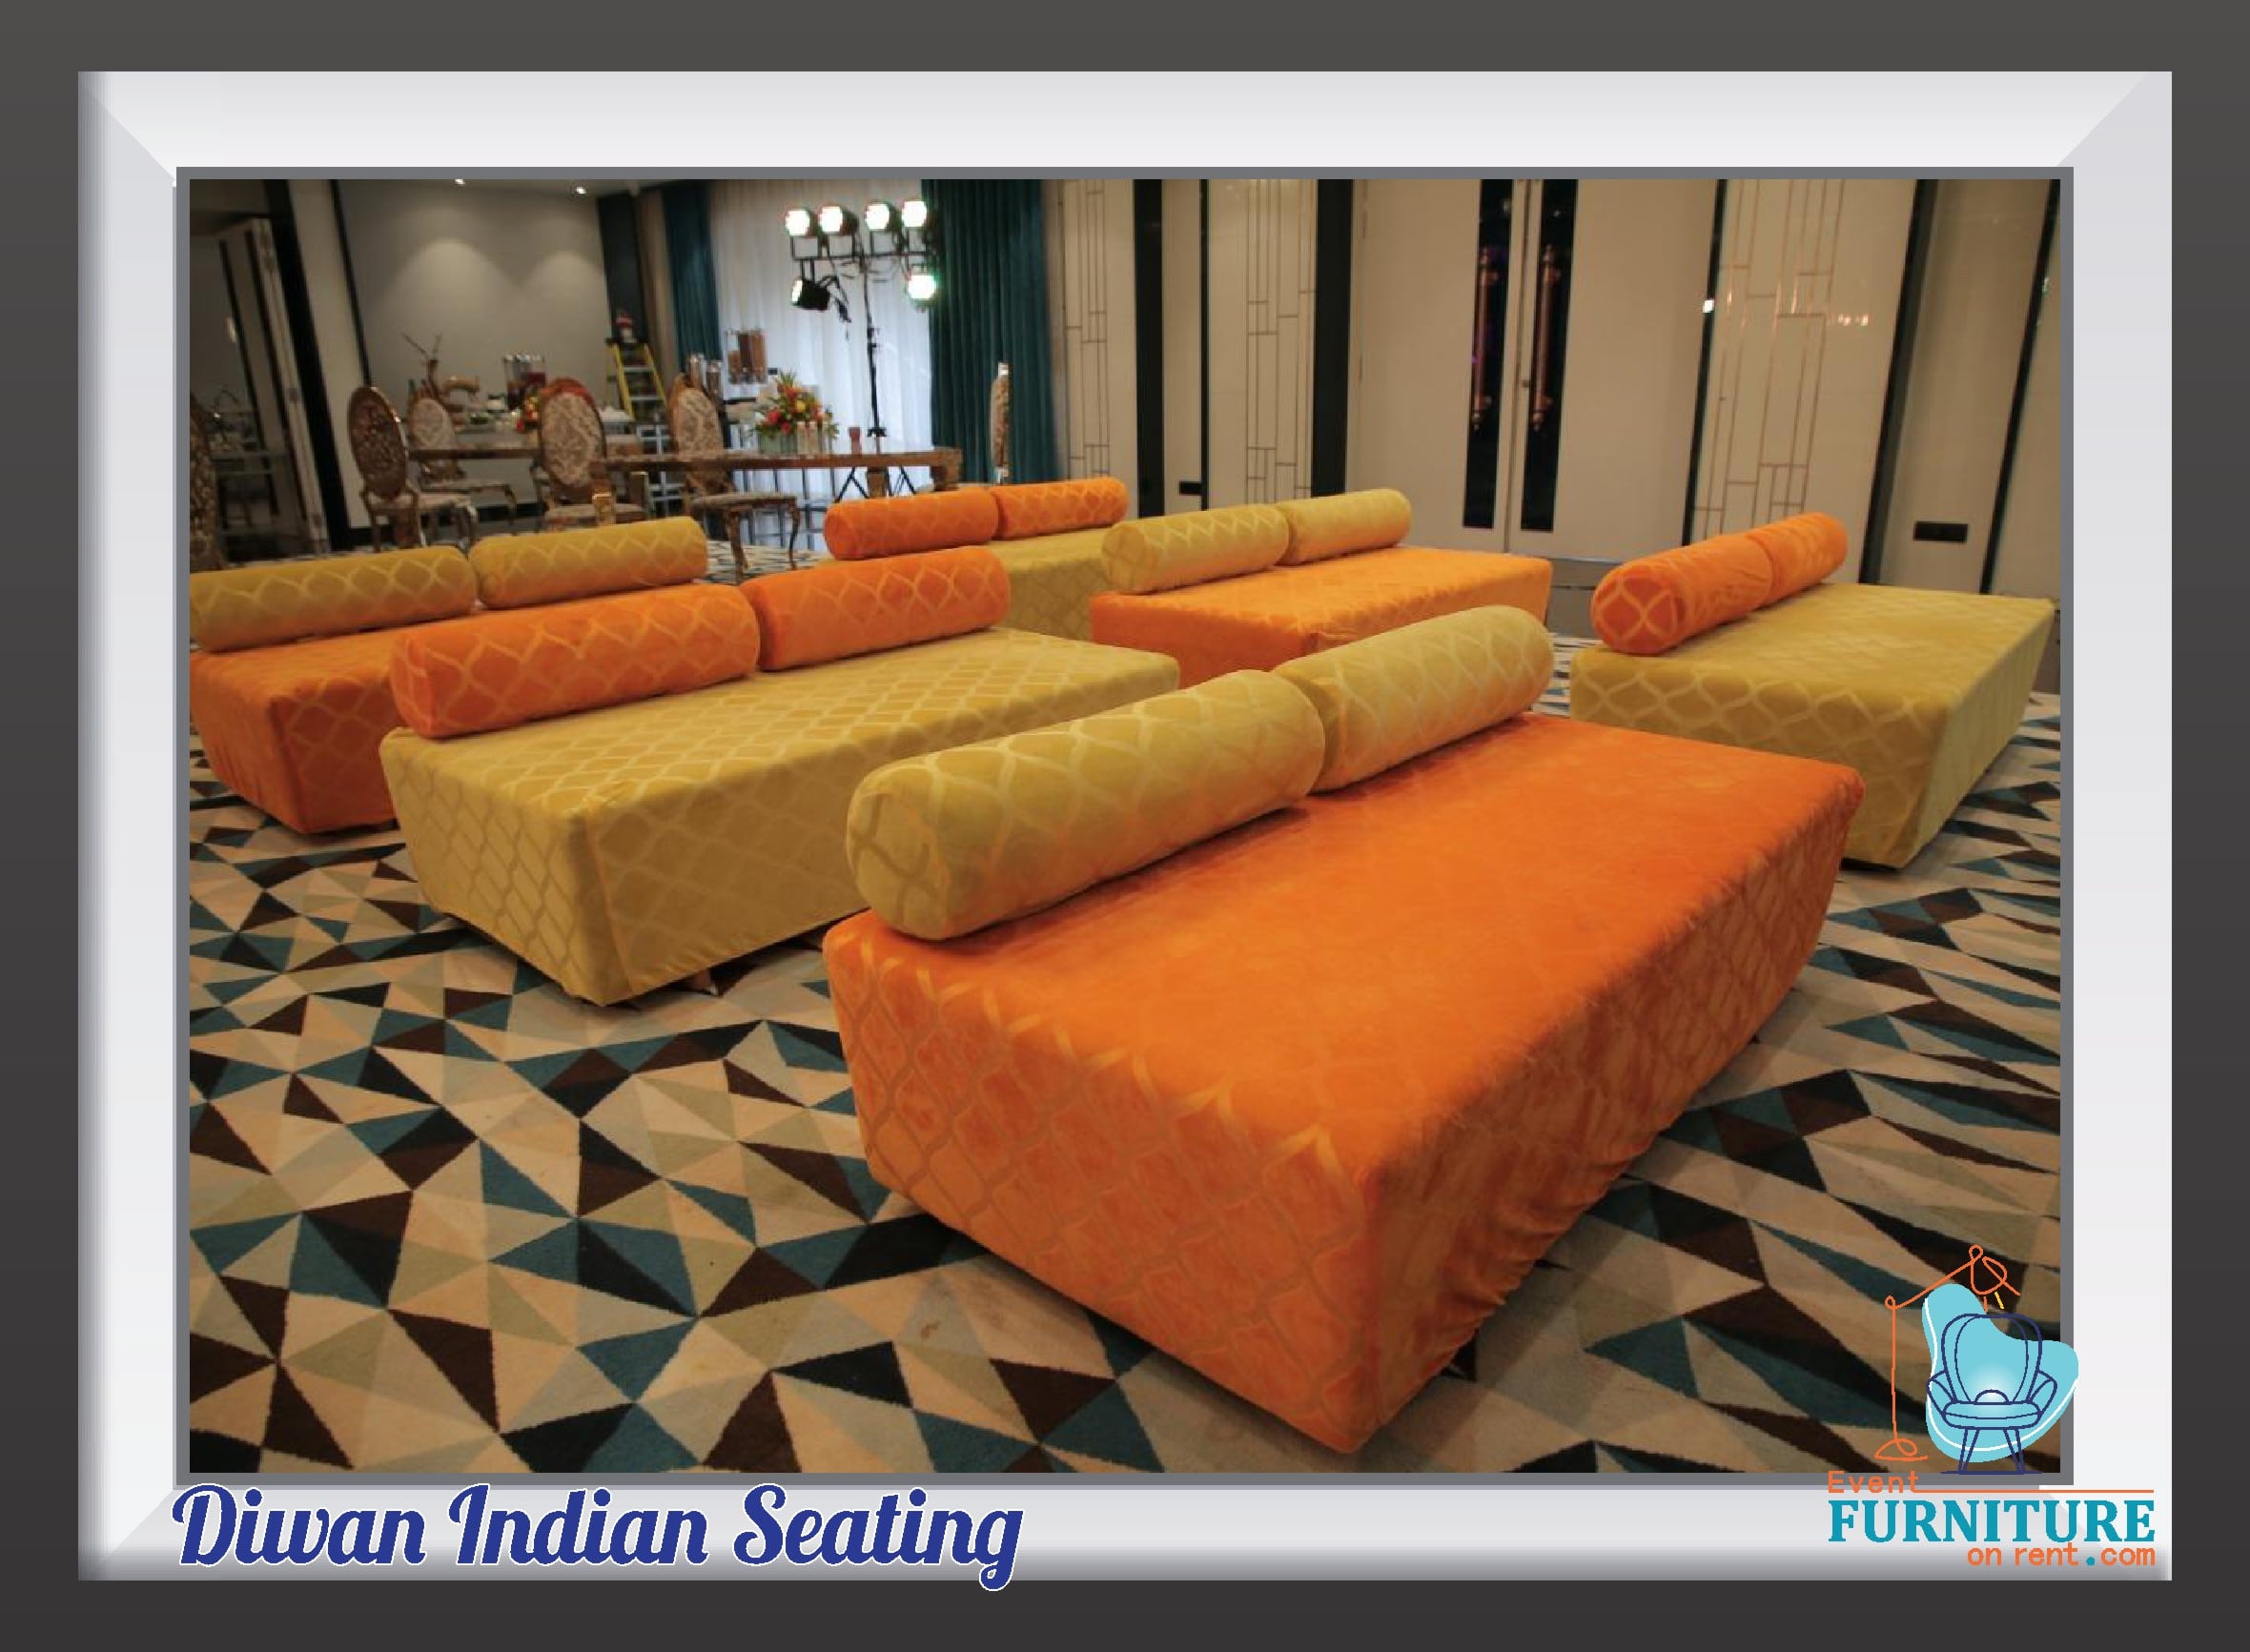 Diwan Indian Seating Sbh 19 Furniture On